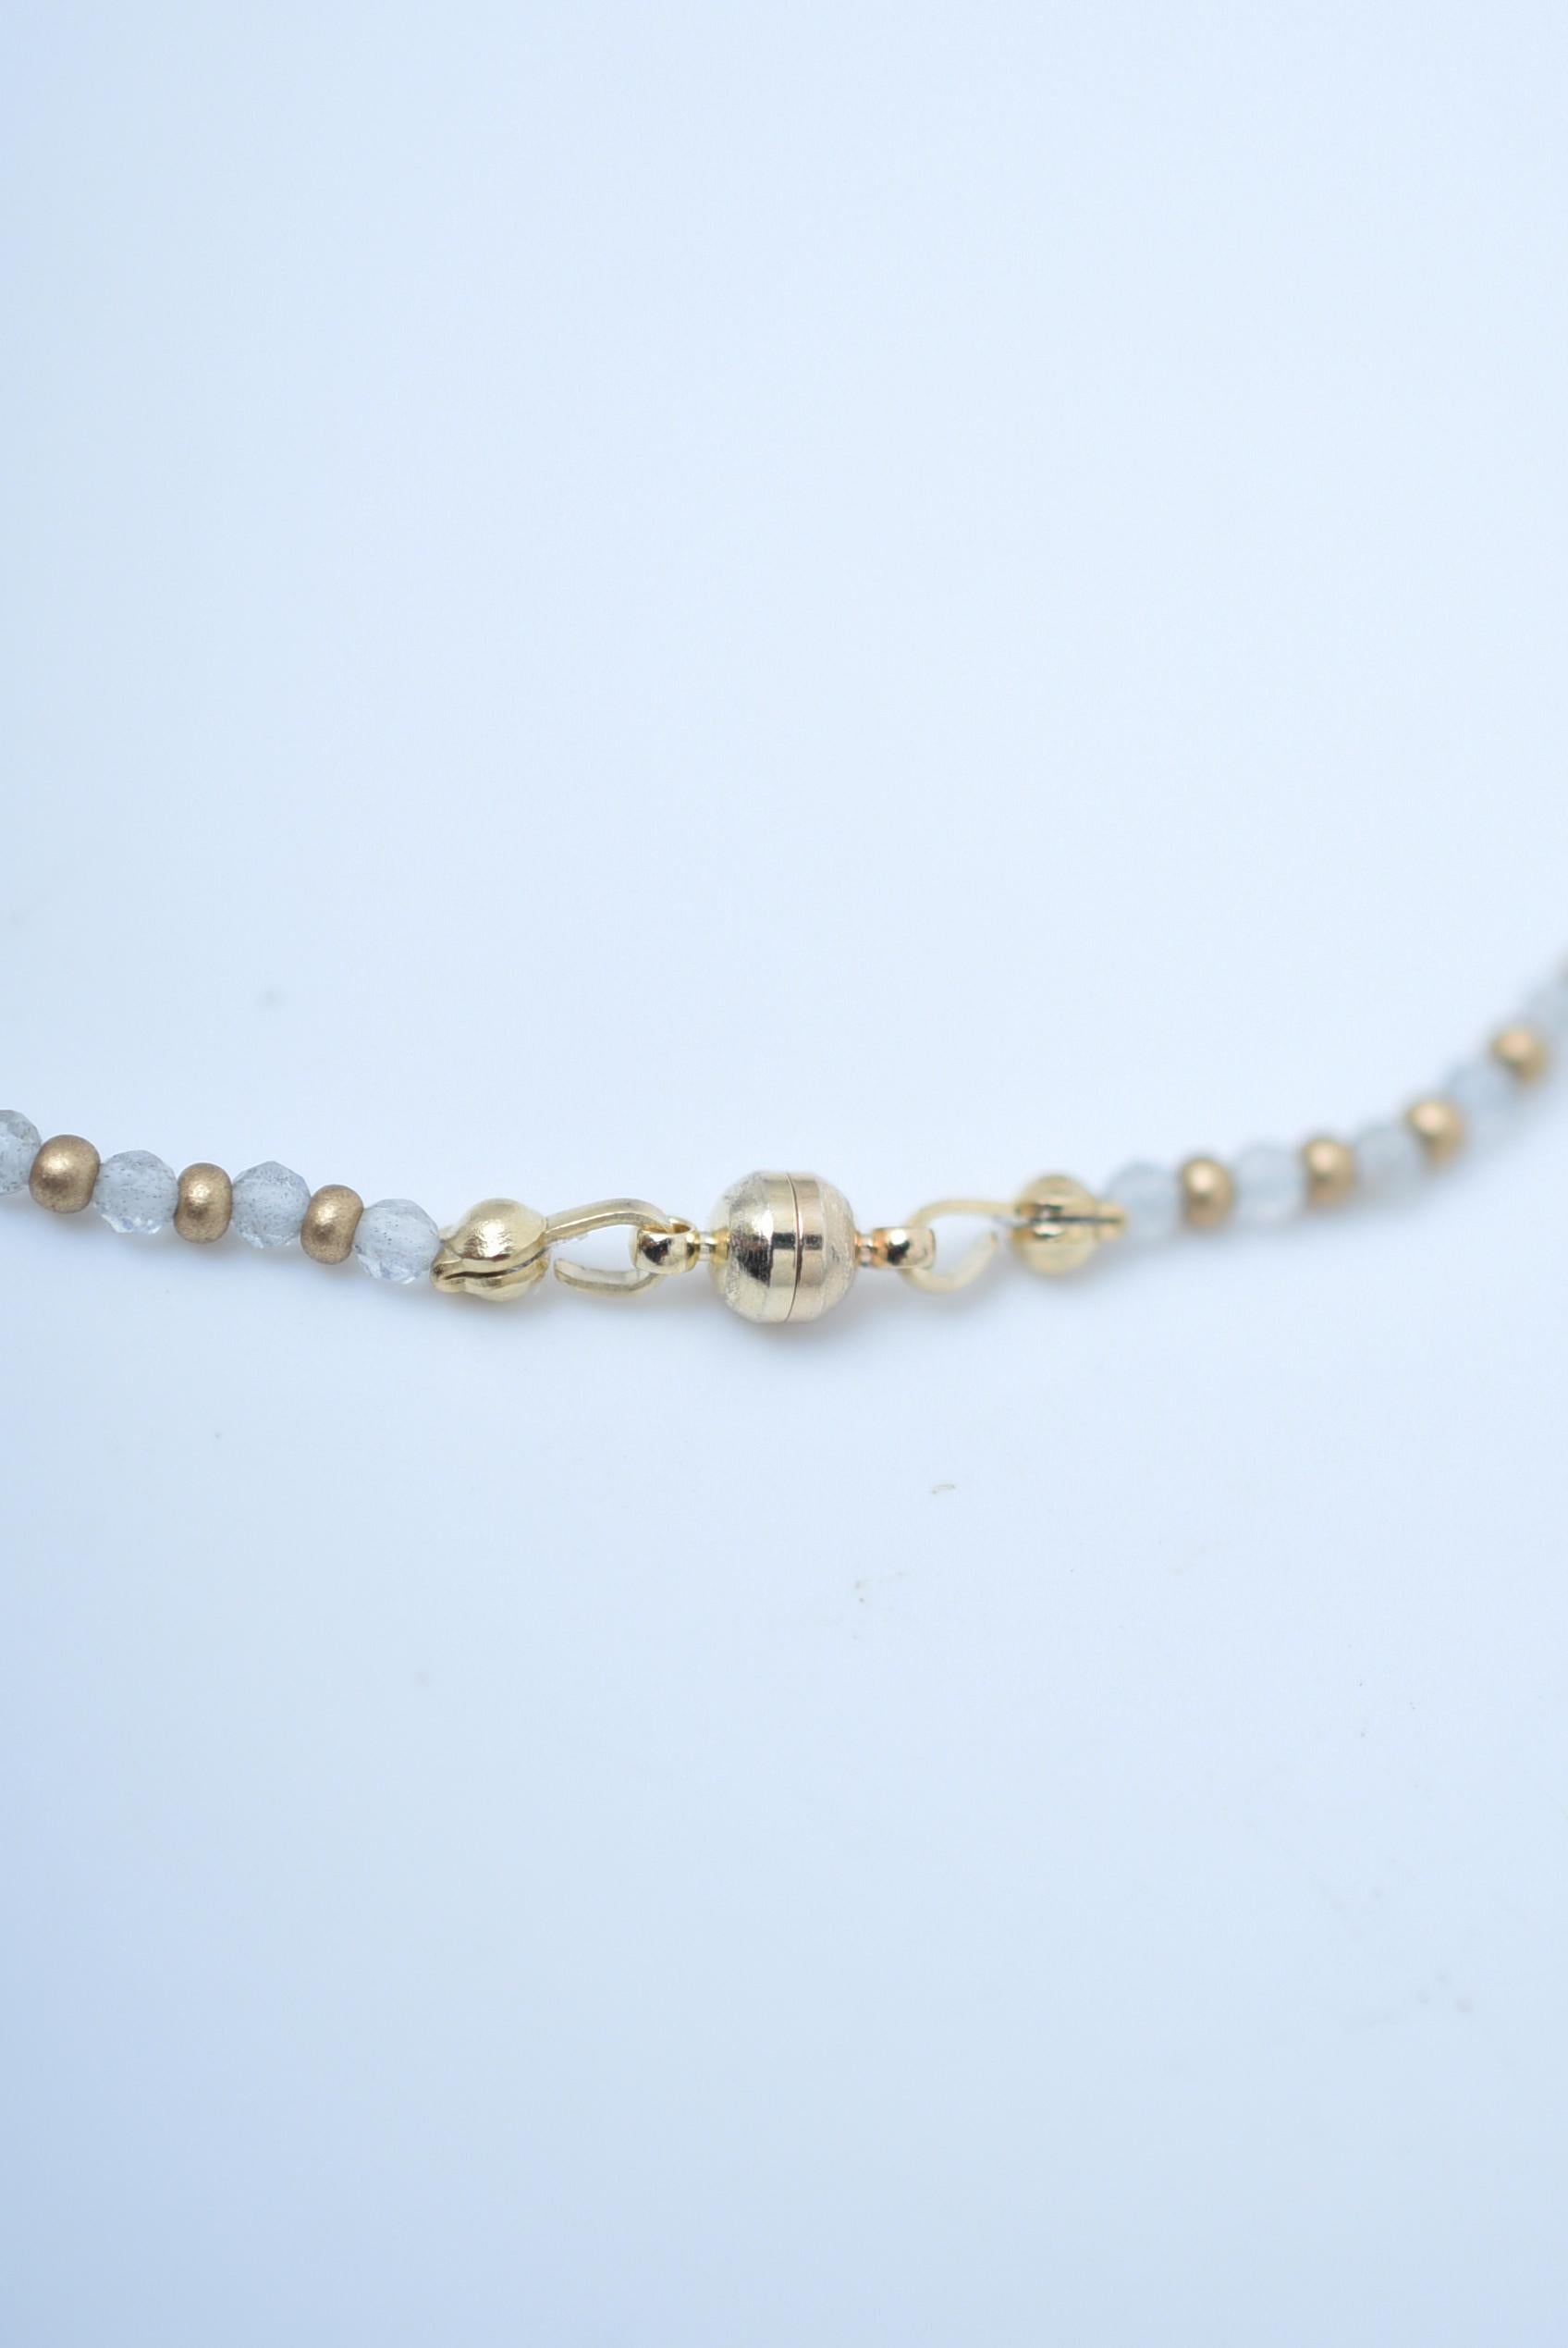 Artisan matataki necklace / vintage jewelry , 1970's vintage parts For Sale